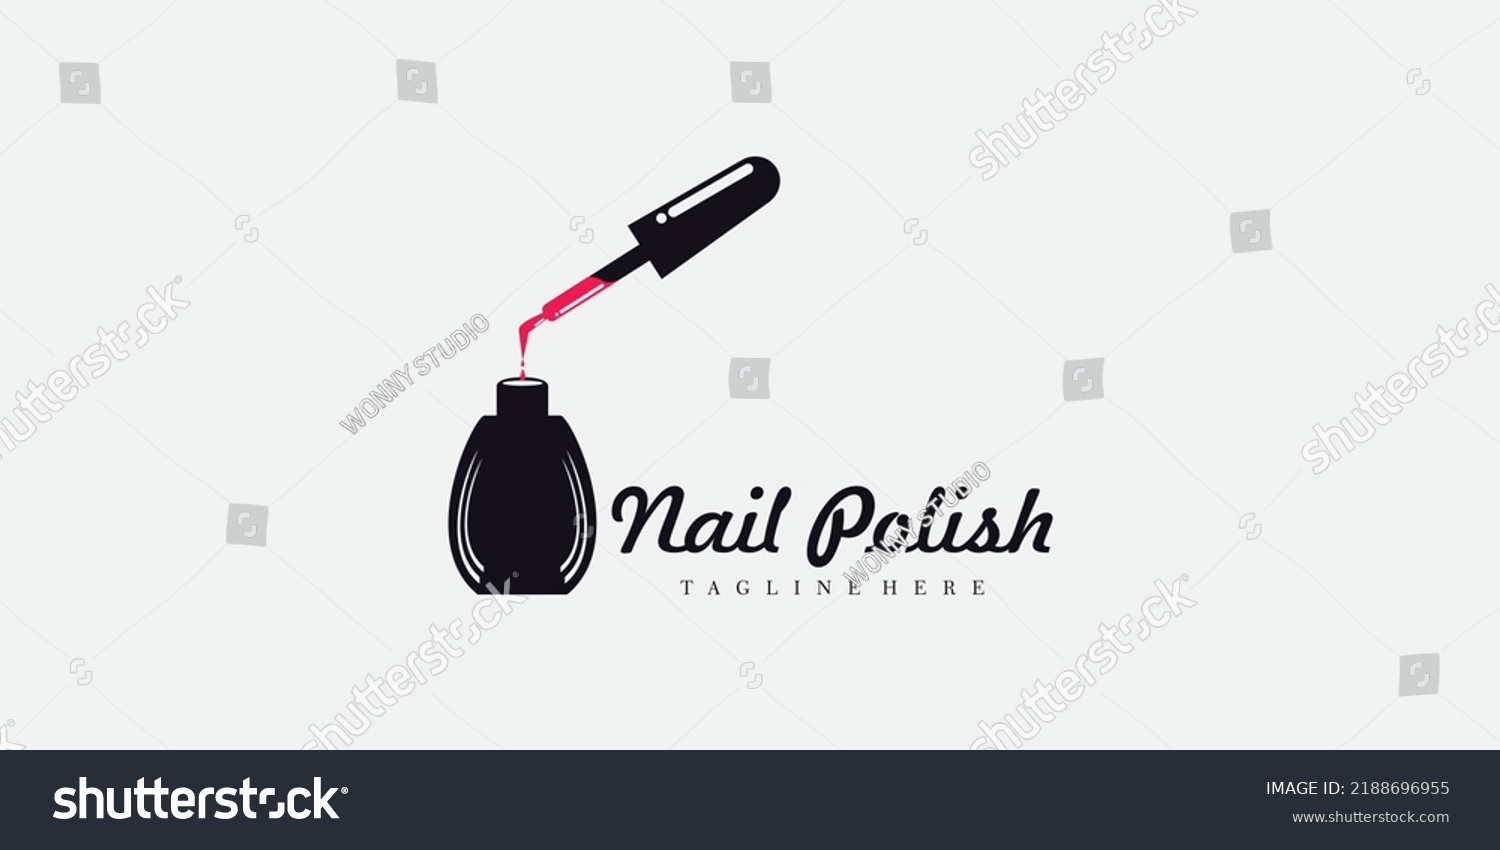 Nail Beauty Salon Logo Creative Concept Stock Vector (Royalty Free ...